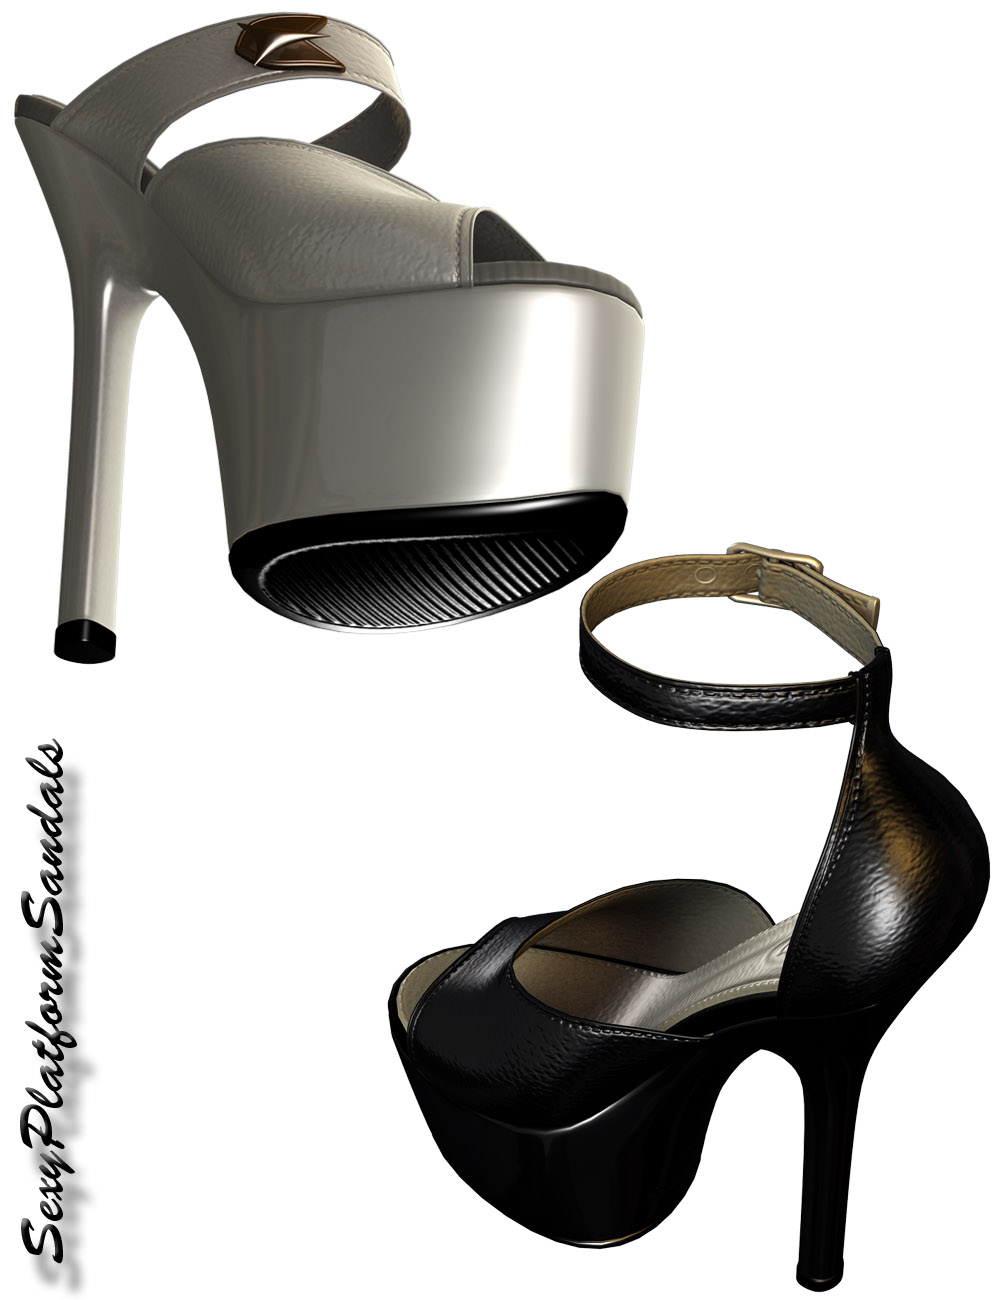 Sexy Platform Sandals by: dx30, 3D Models by Daz 3D